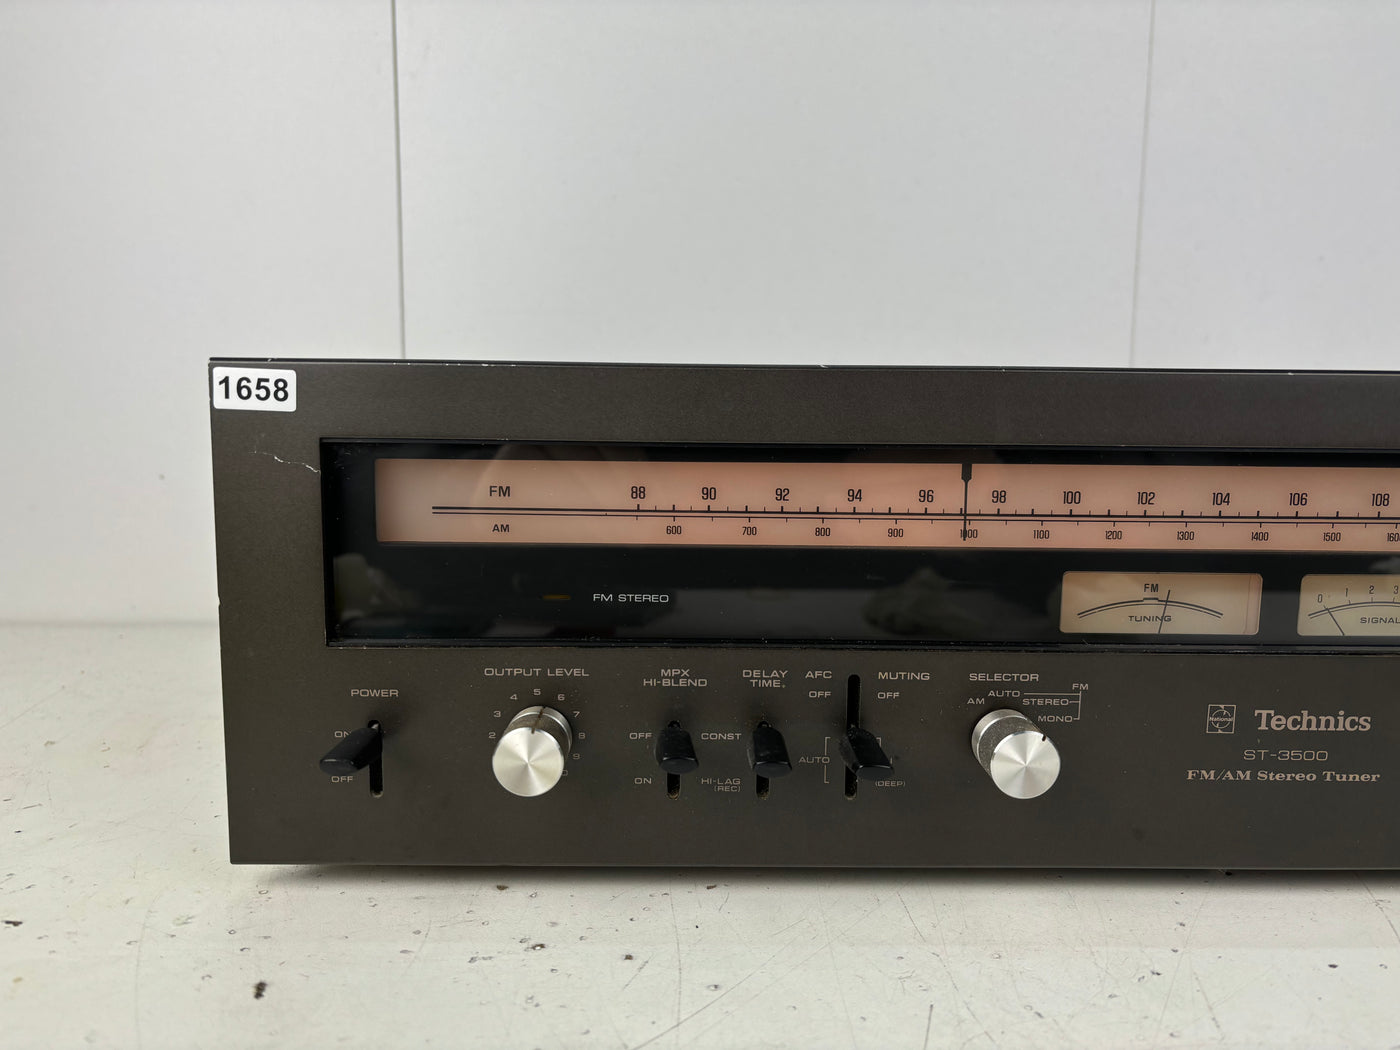 Technics ST-3500 FM/AM Stereo Tuner